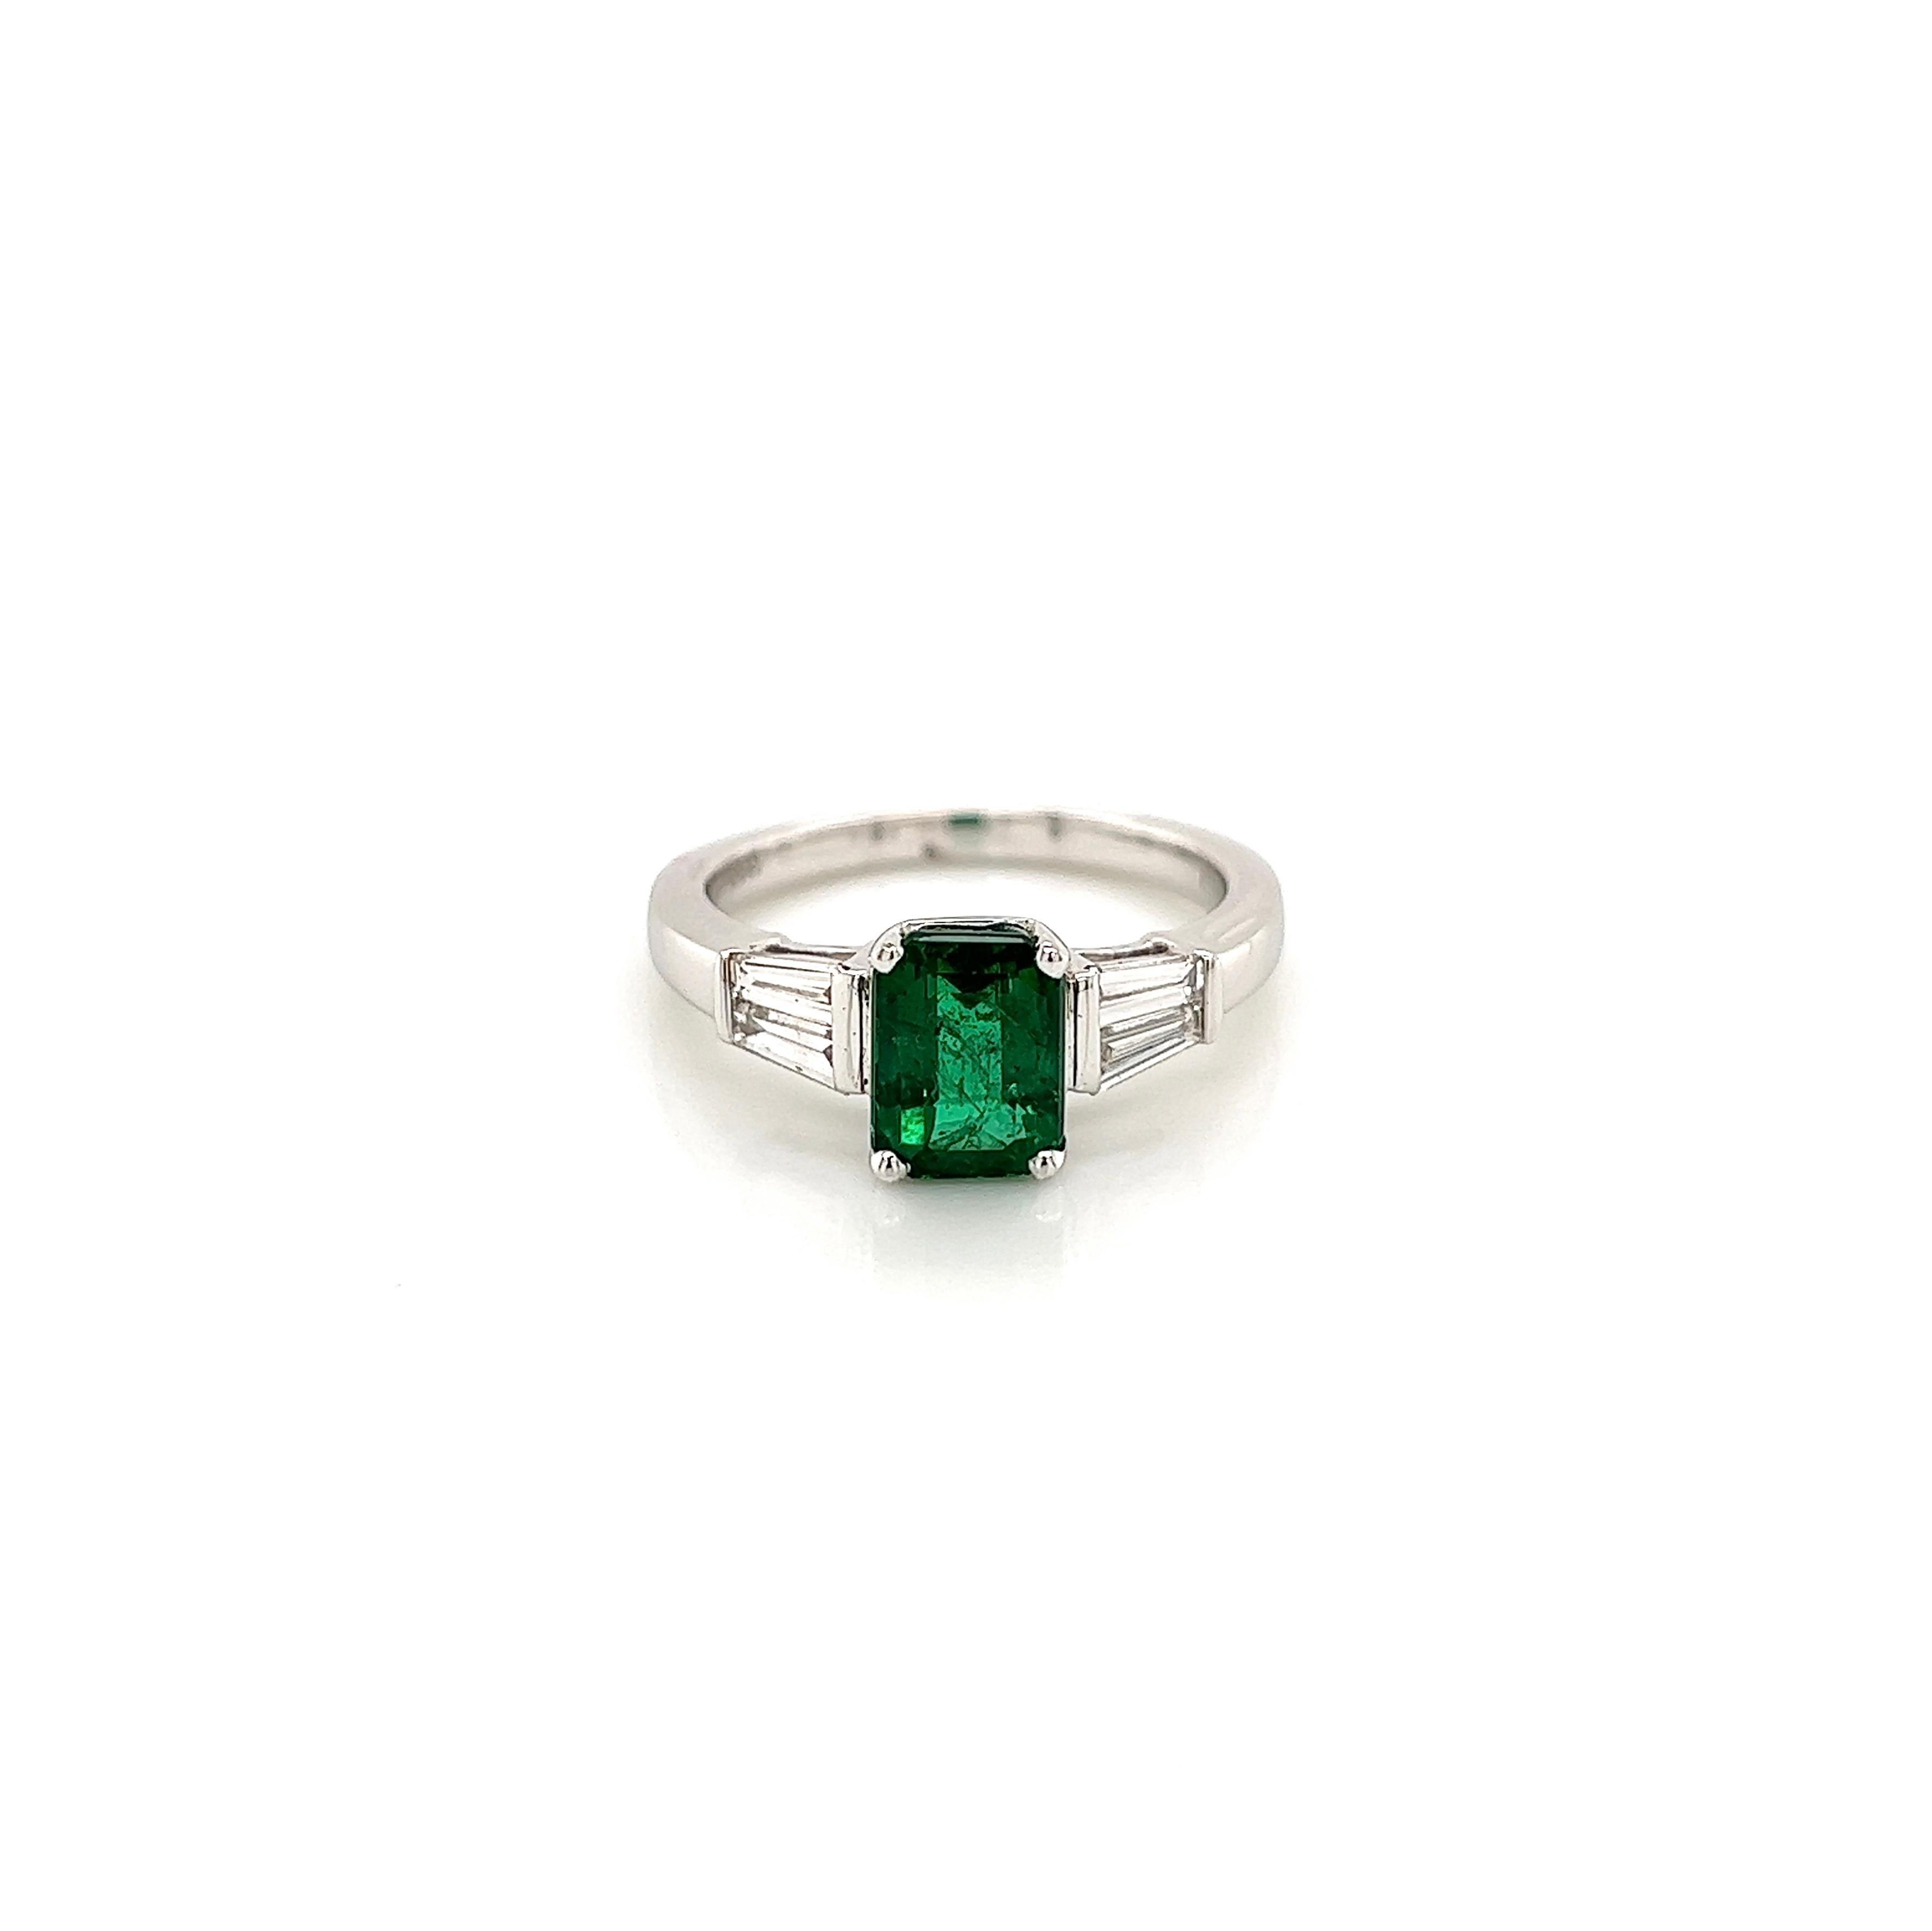 2.17 Total Carat Green Emerald Ladies Three Stone Ring 

-Metal Type: 18K White Gold
-1.72 Carat Green Emerald, 8.06 x 5.92 x 4.63 mm
-0.45 Carat Baguette Side Diamonds 
-Size 6.75

Made in New York City